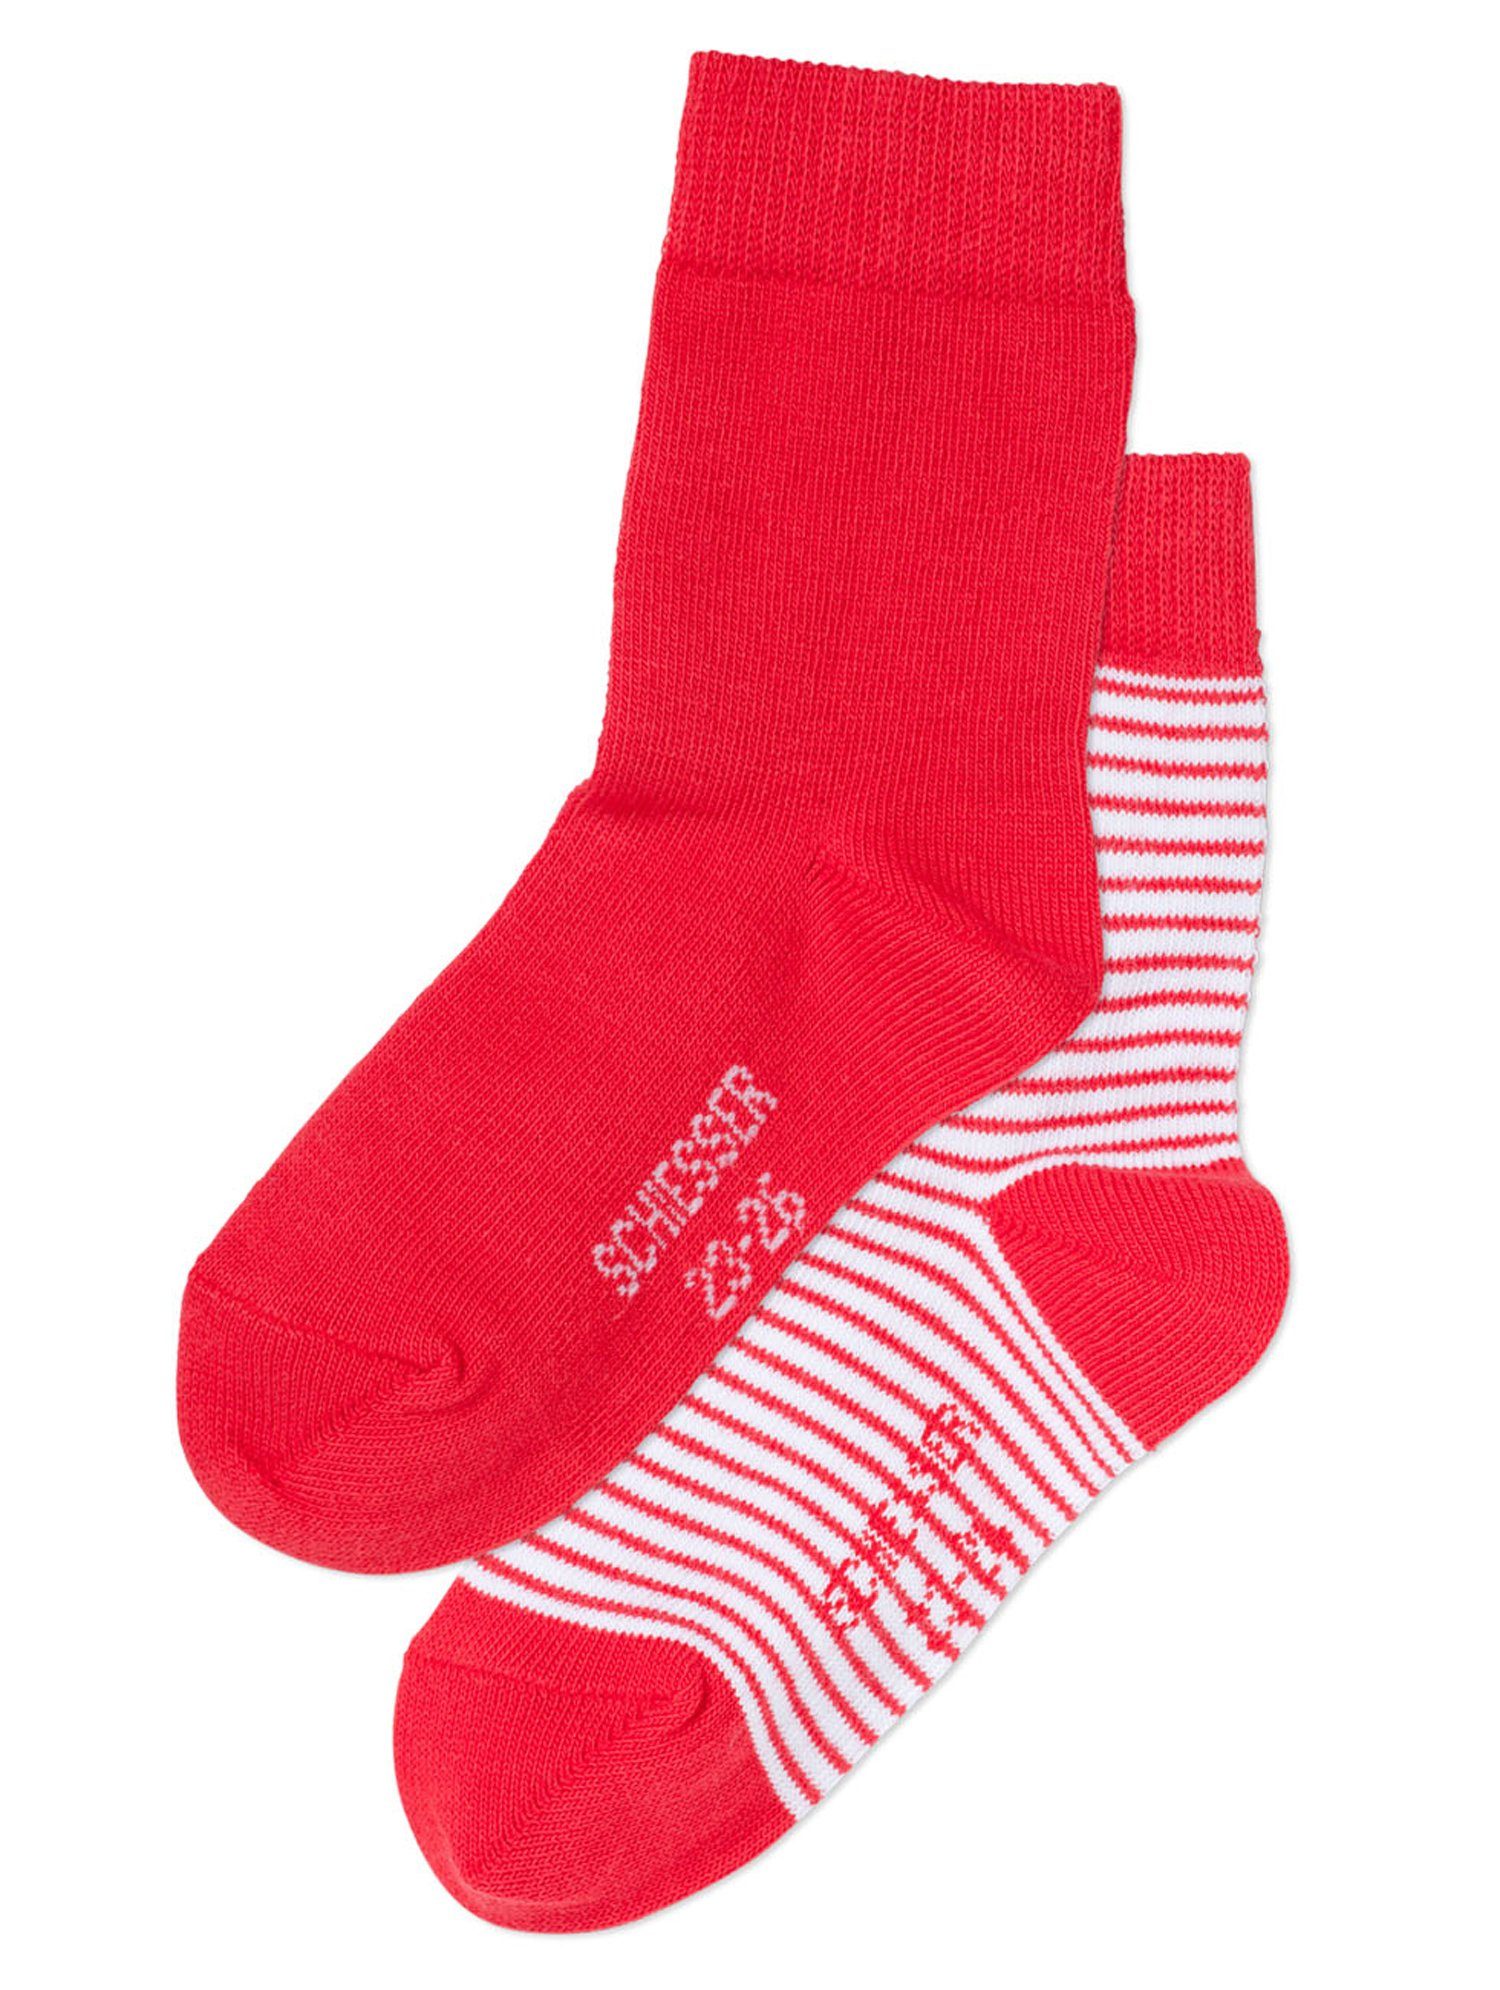 Schiesser Langsocken 142311 (Packung, 2-Paar, 2 Paar) Kinder Socken, Jungen & Mädchen mit Baumwolle, Kindersocken